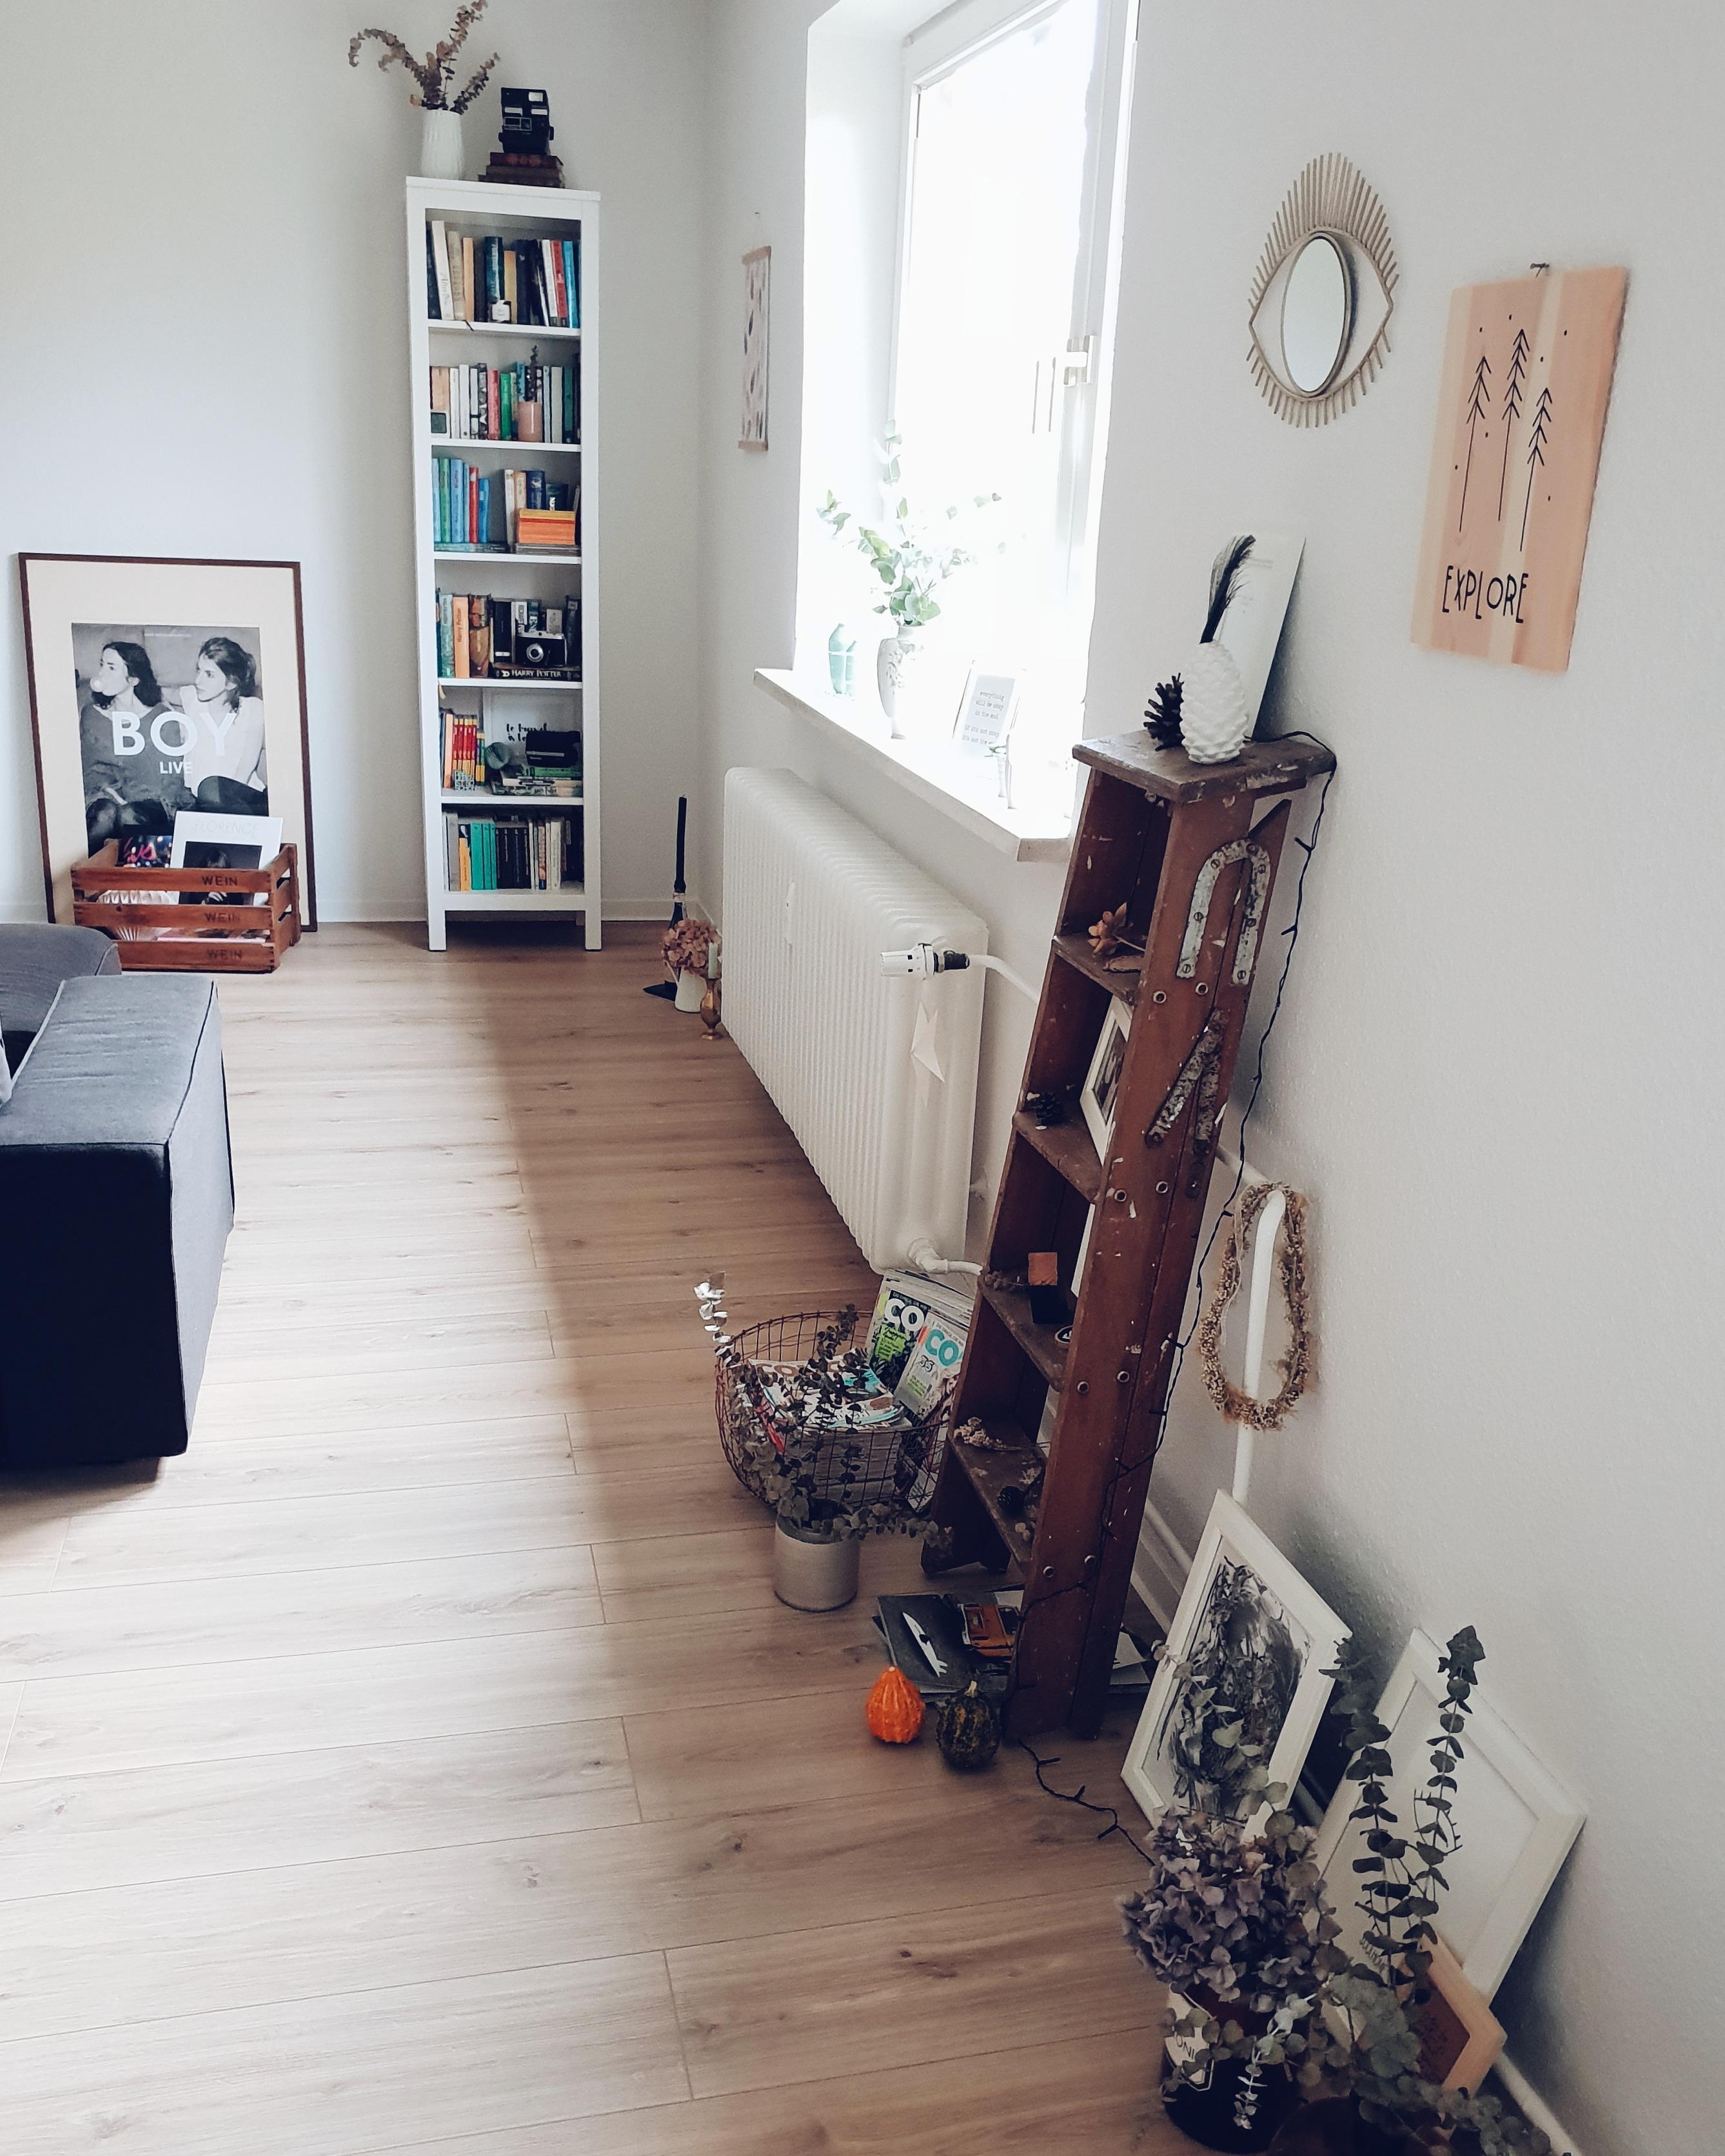 3 Zimmer, Küche, Bad. ❤ #home #interior #interiorinspo #livinginspo #livingroom #wohnzimmer #wohnglück #homeinspo #details